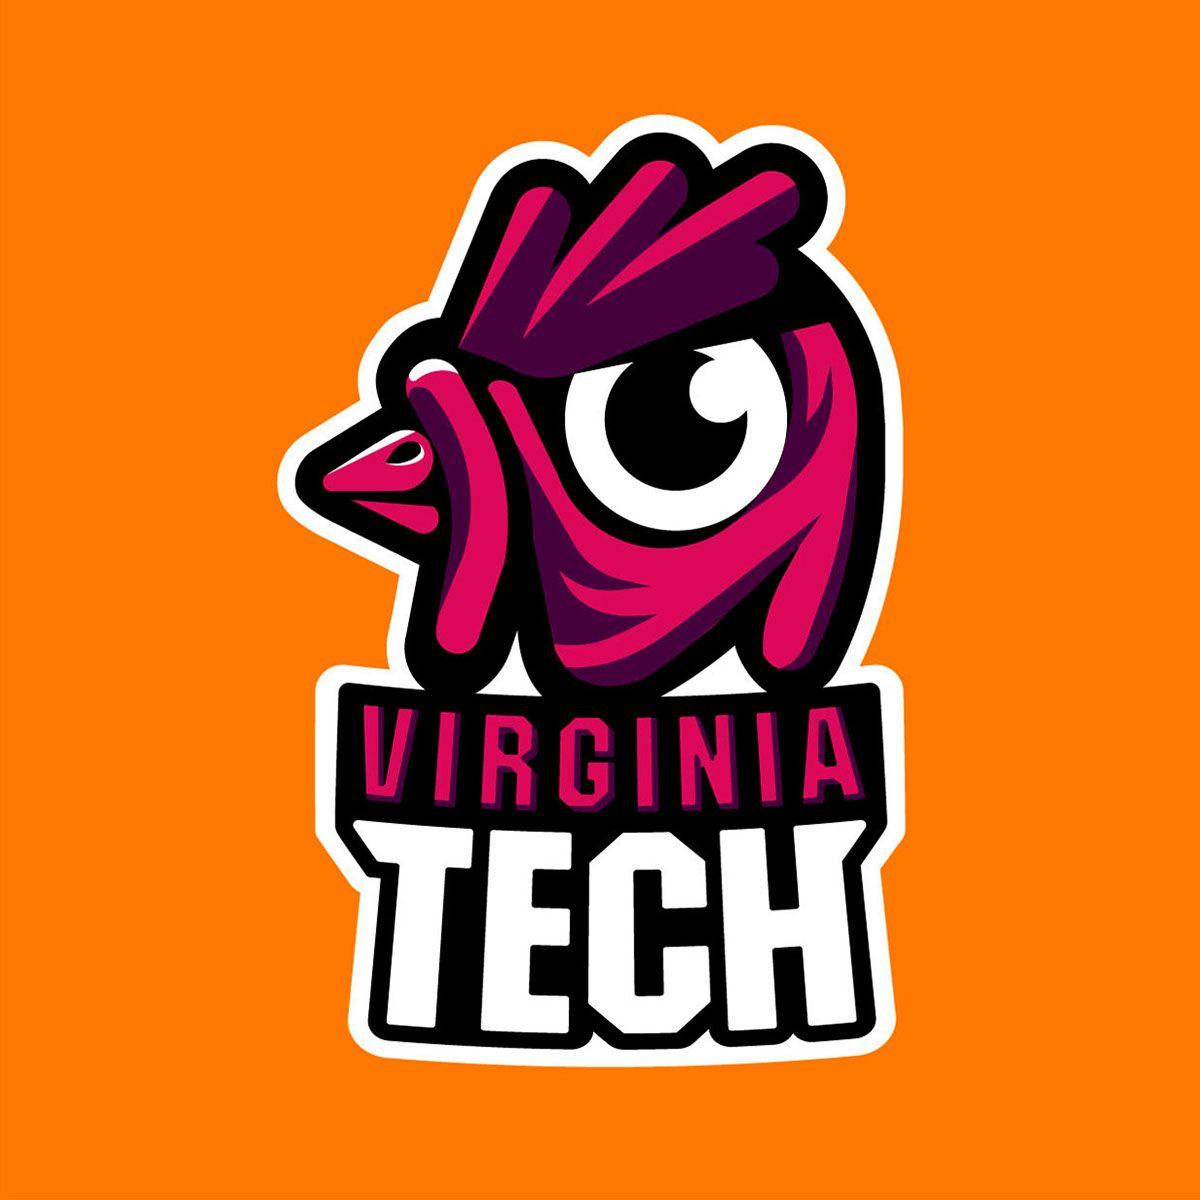 Hookies Logo - Virginia Tech 